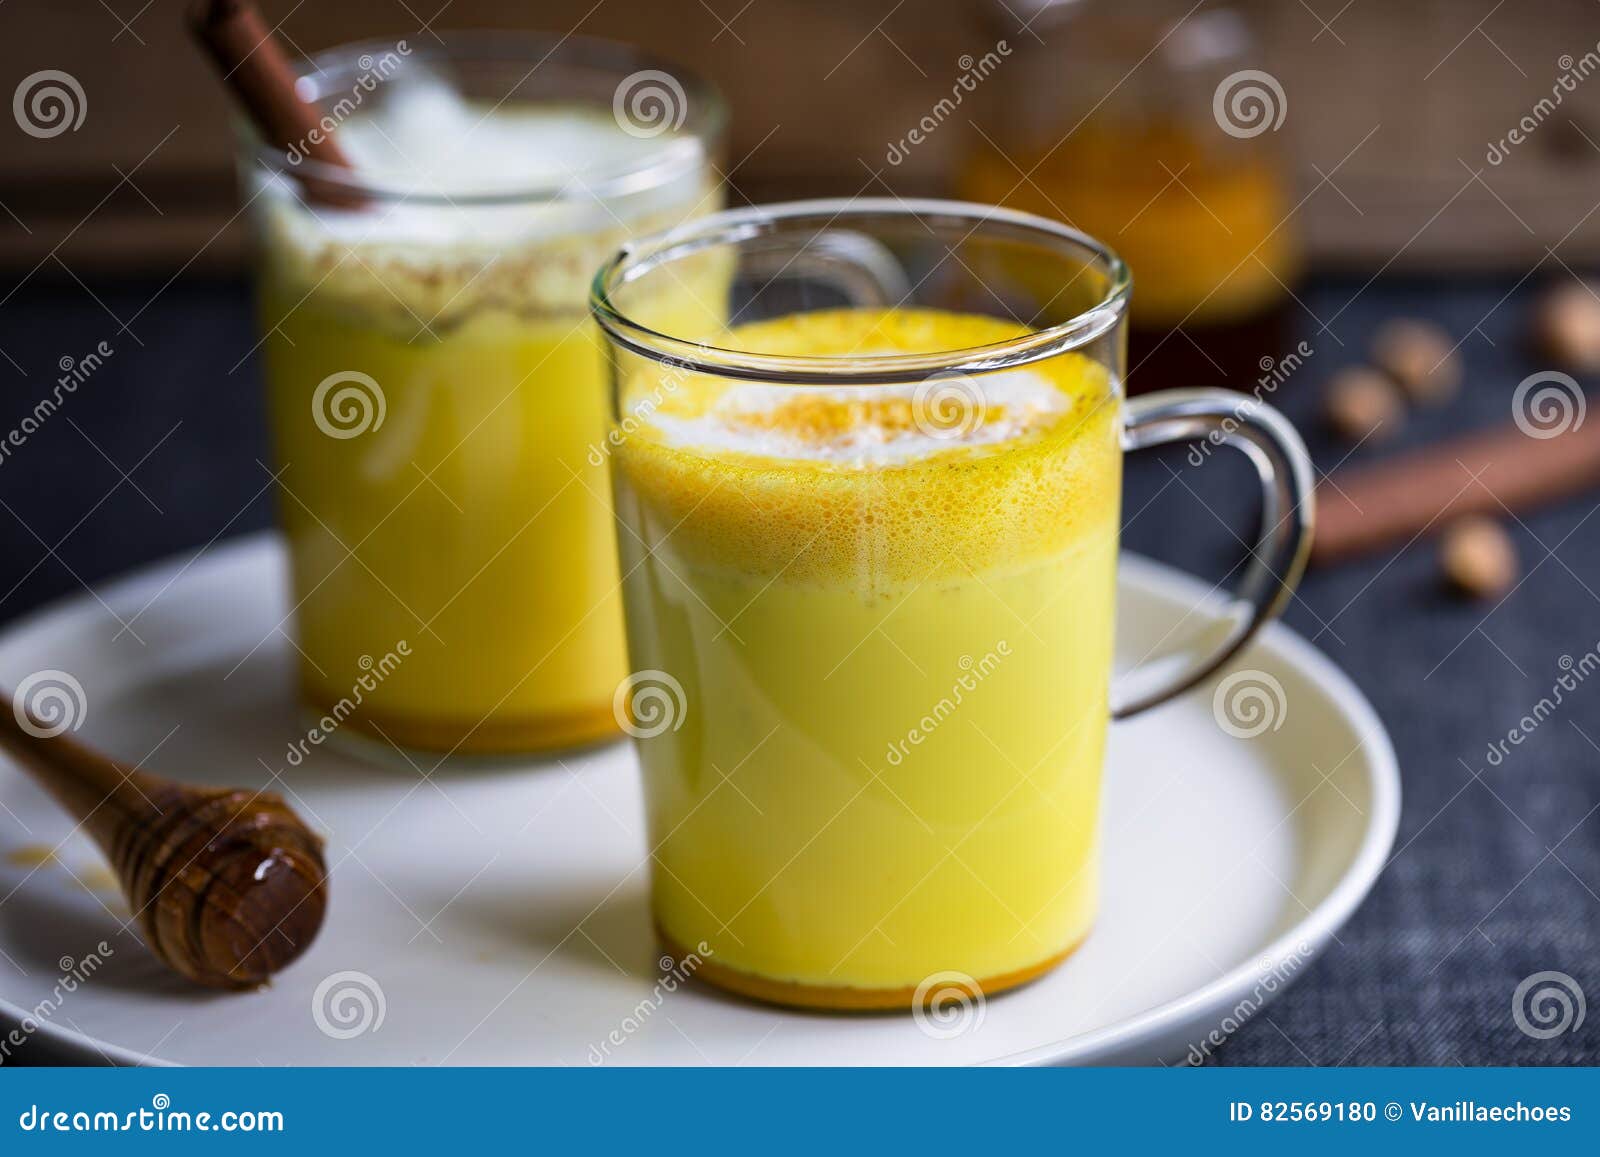 Turmeric latte stock photo. Image of cuisine, cooking - 82569180